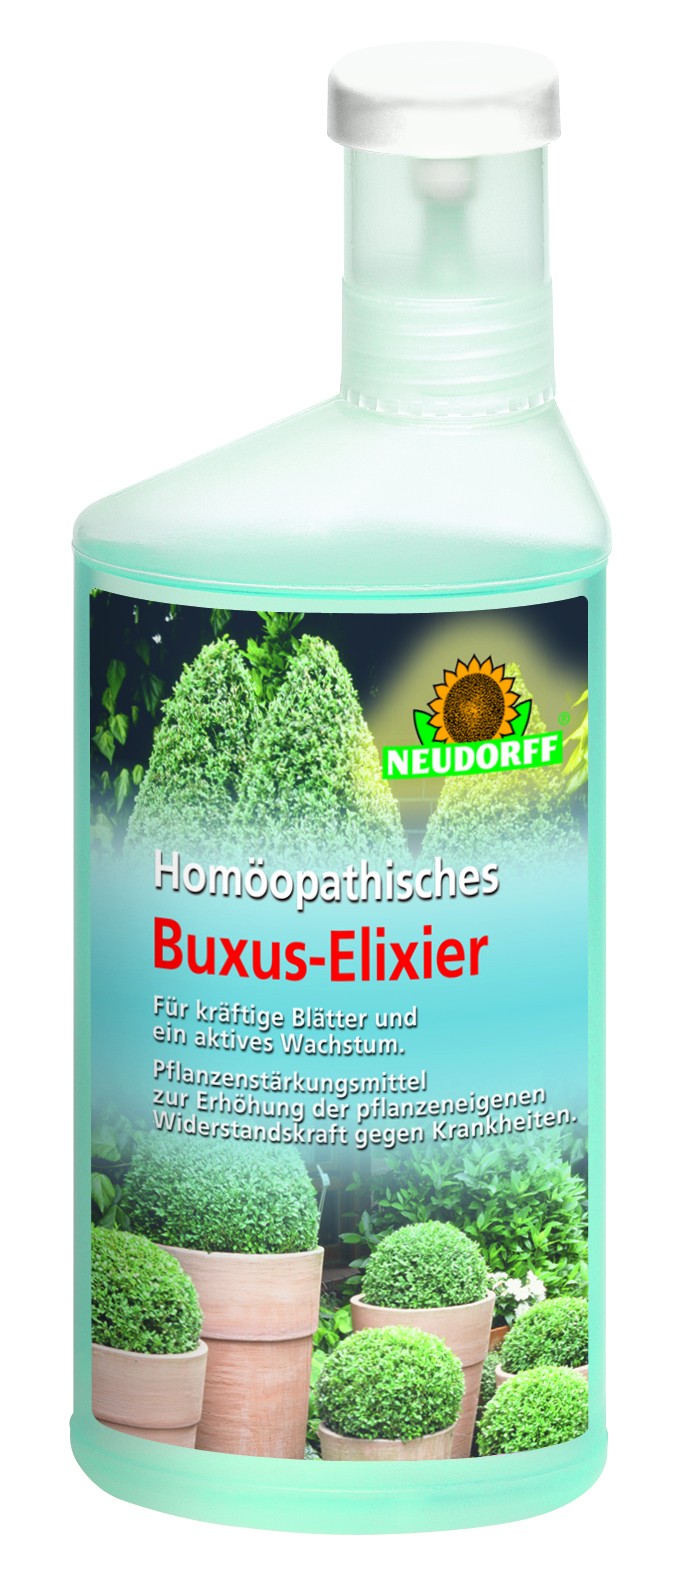 Neudorff Buxus-Elixier